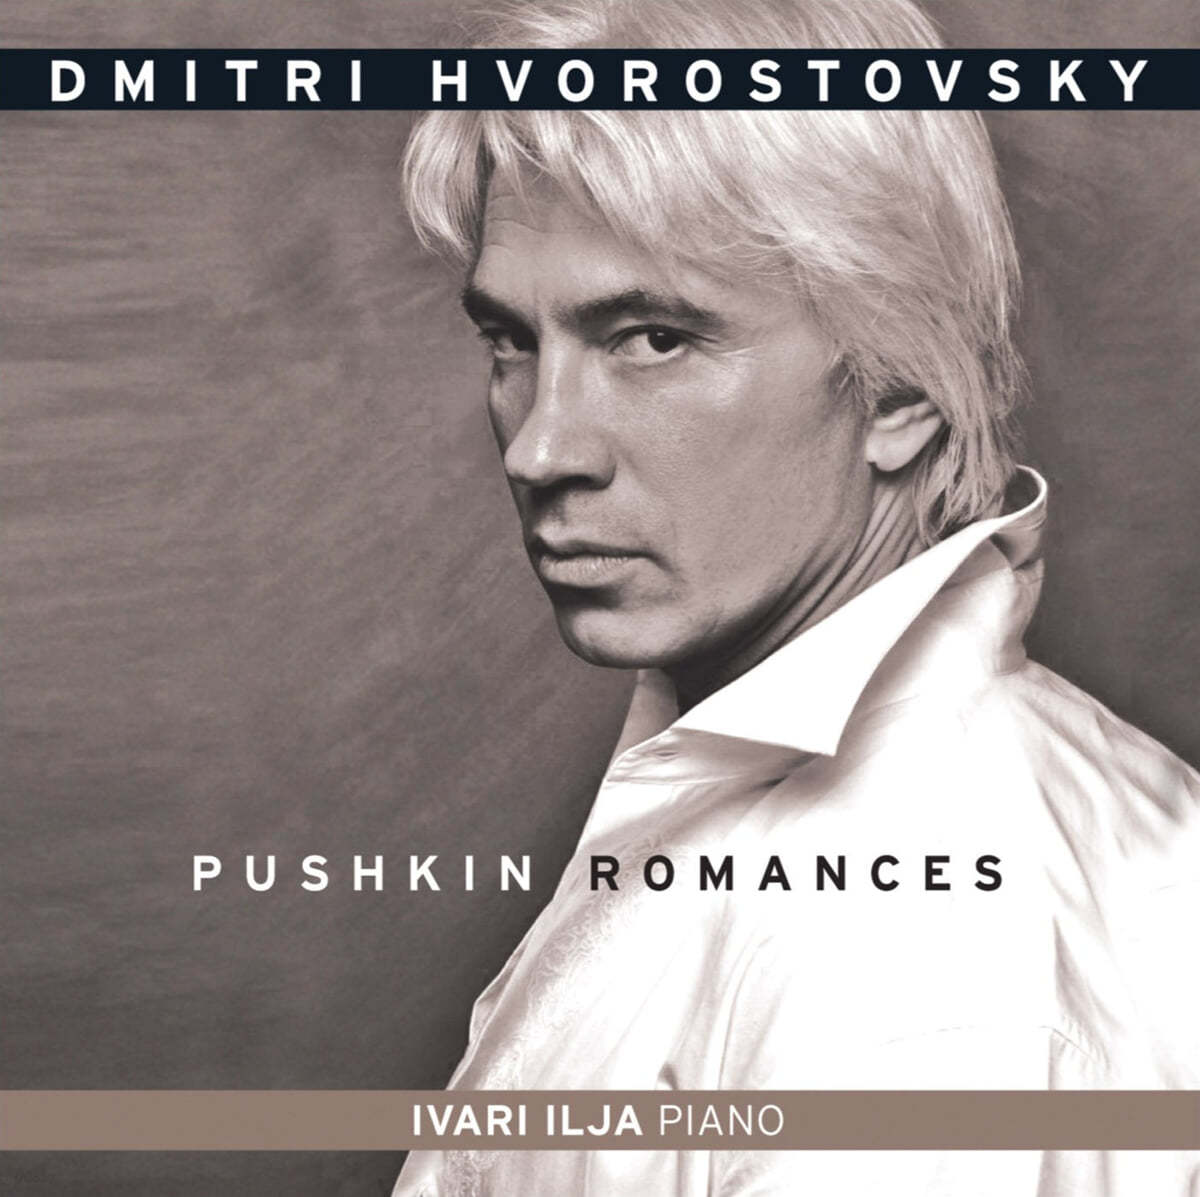 Dmitri Hvorostovsky 러시아 작곡가들의 로망스 - 푸쉬킨 로망스 (Pushkin Romances) 